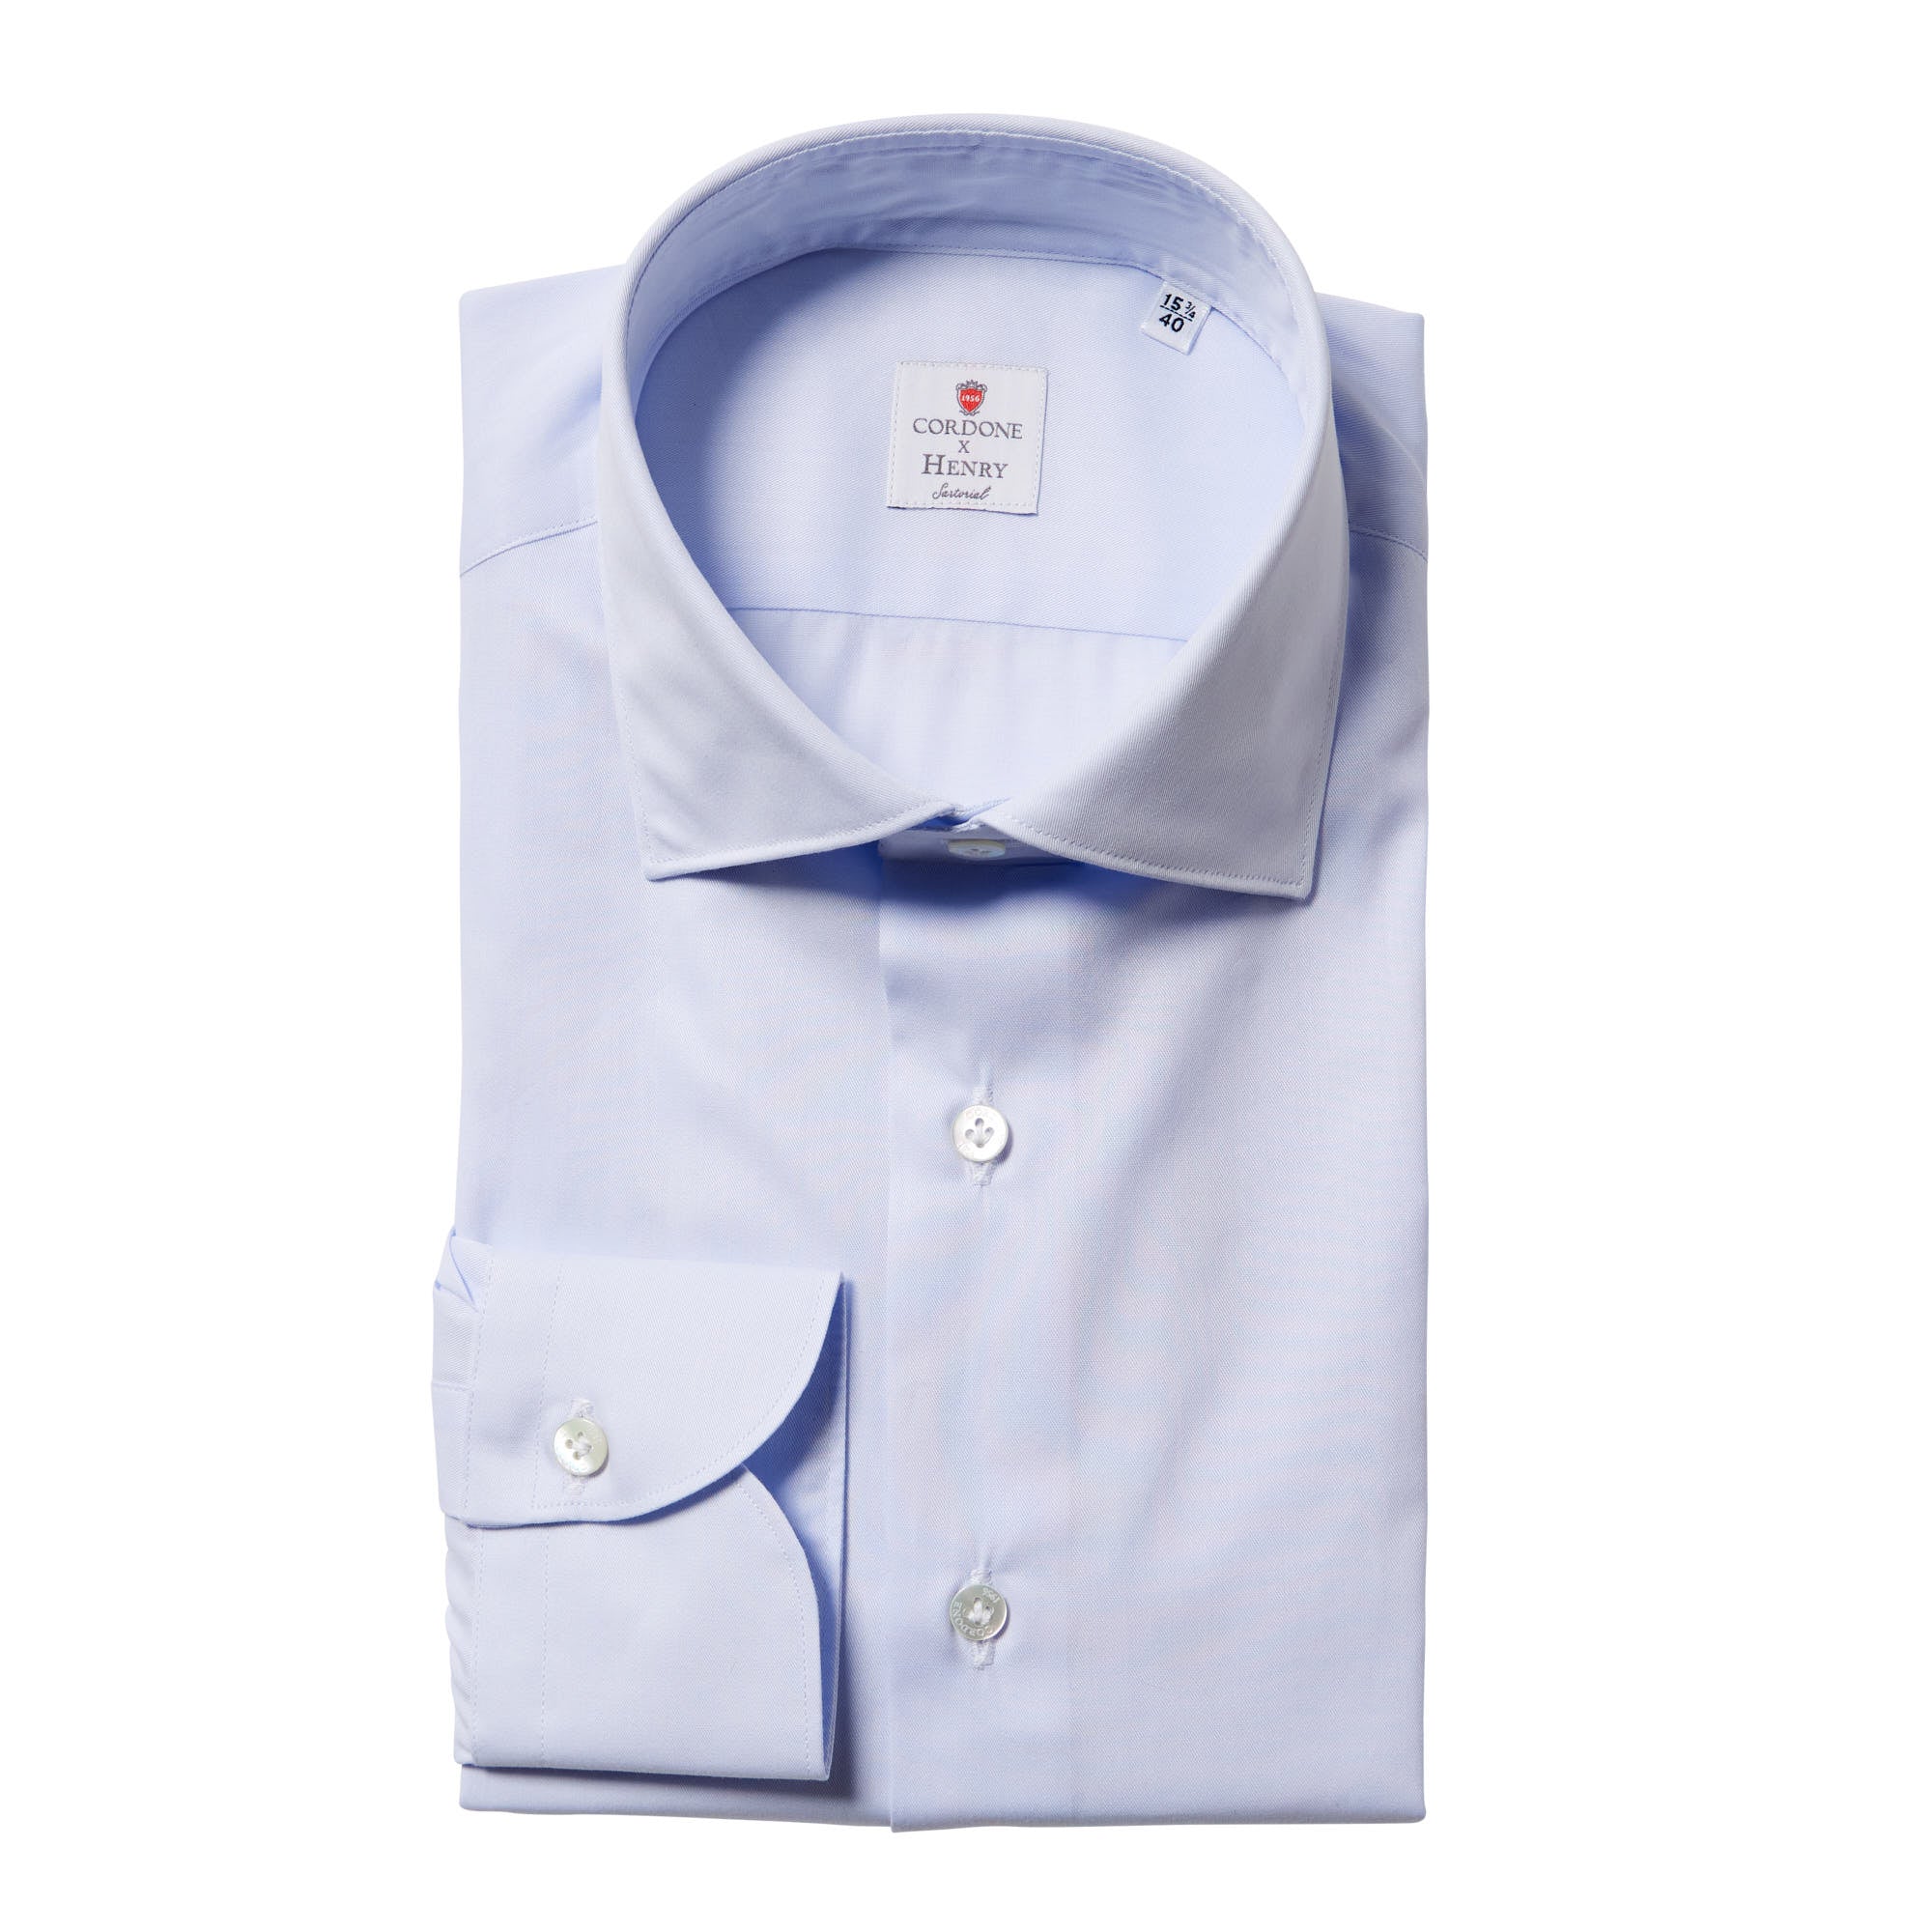 CORDONE Cotton Long Sleeve Single Cuff Shirt LIGHT BLUE - Henry BucksShirts38AW240077 - LTBL - SC - 39